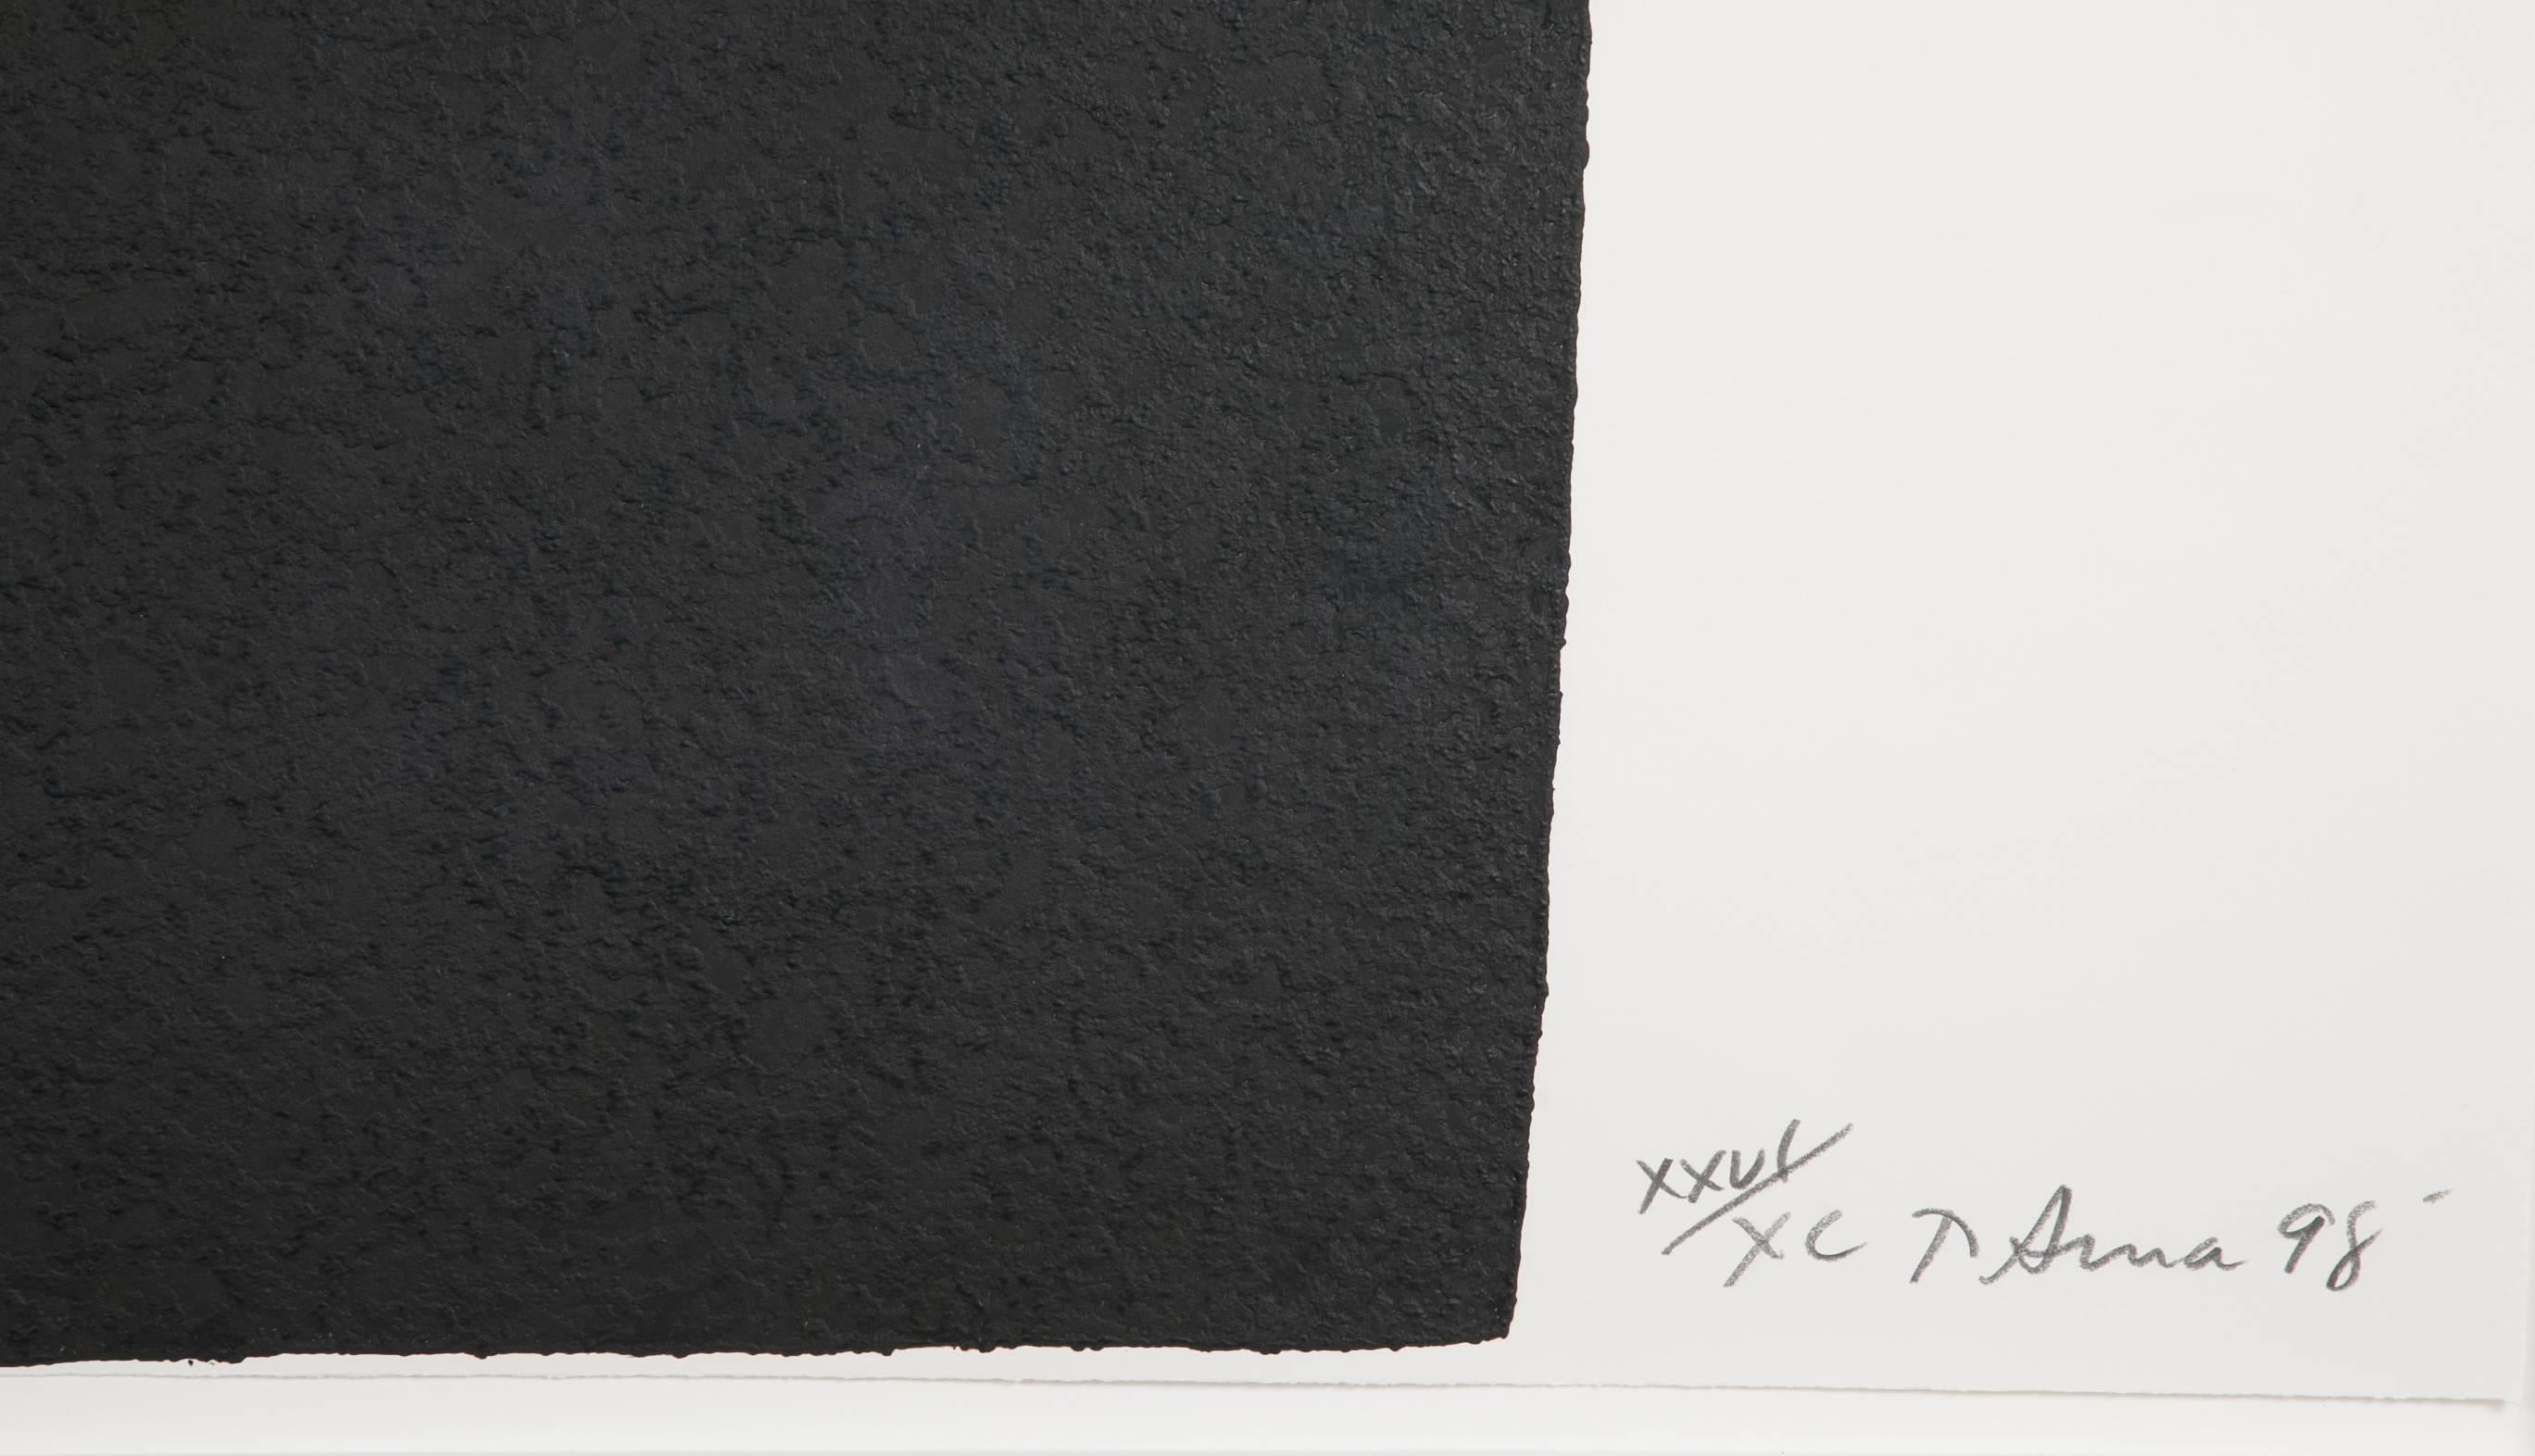 Richard Serra work on paper 